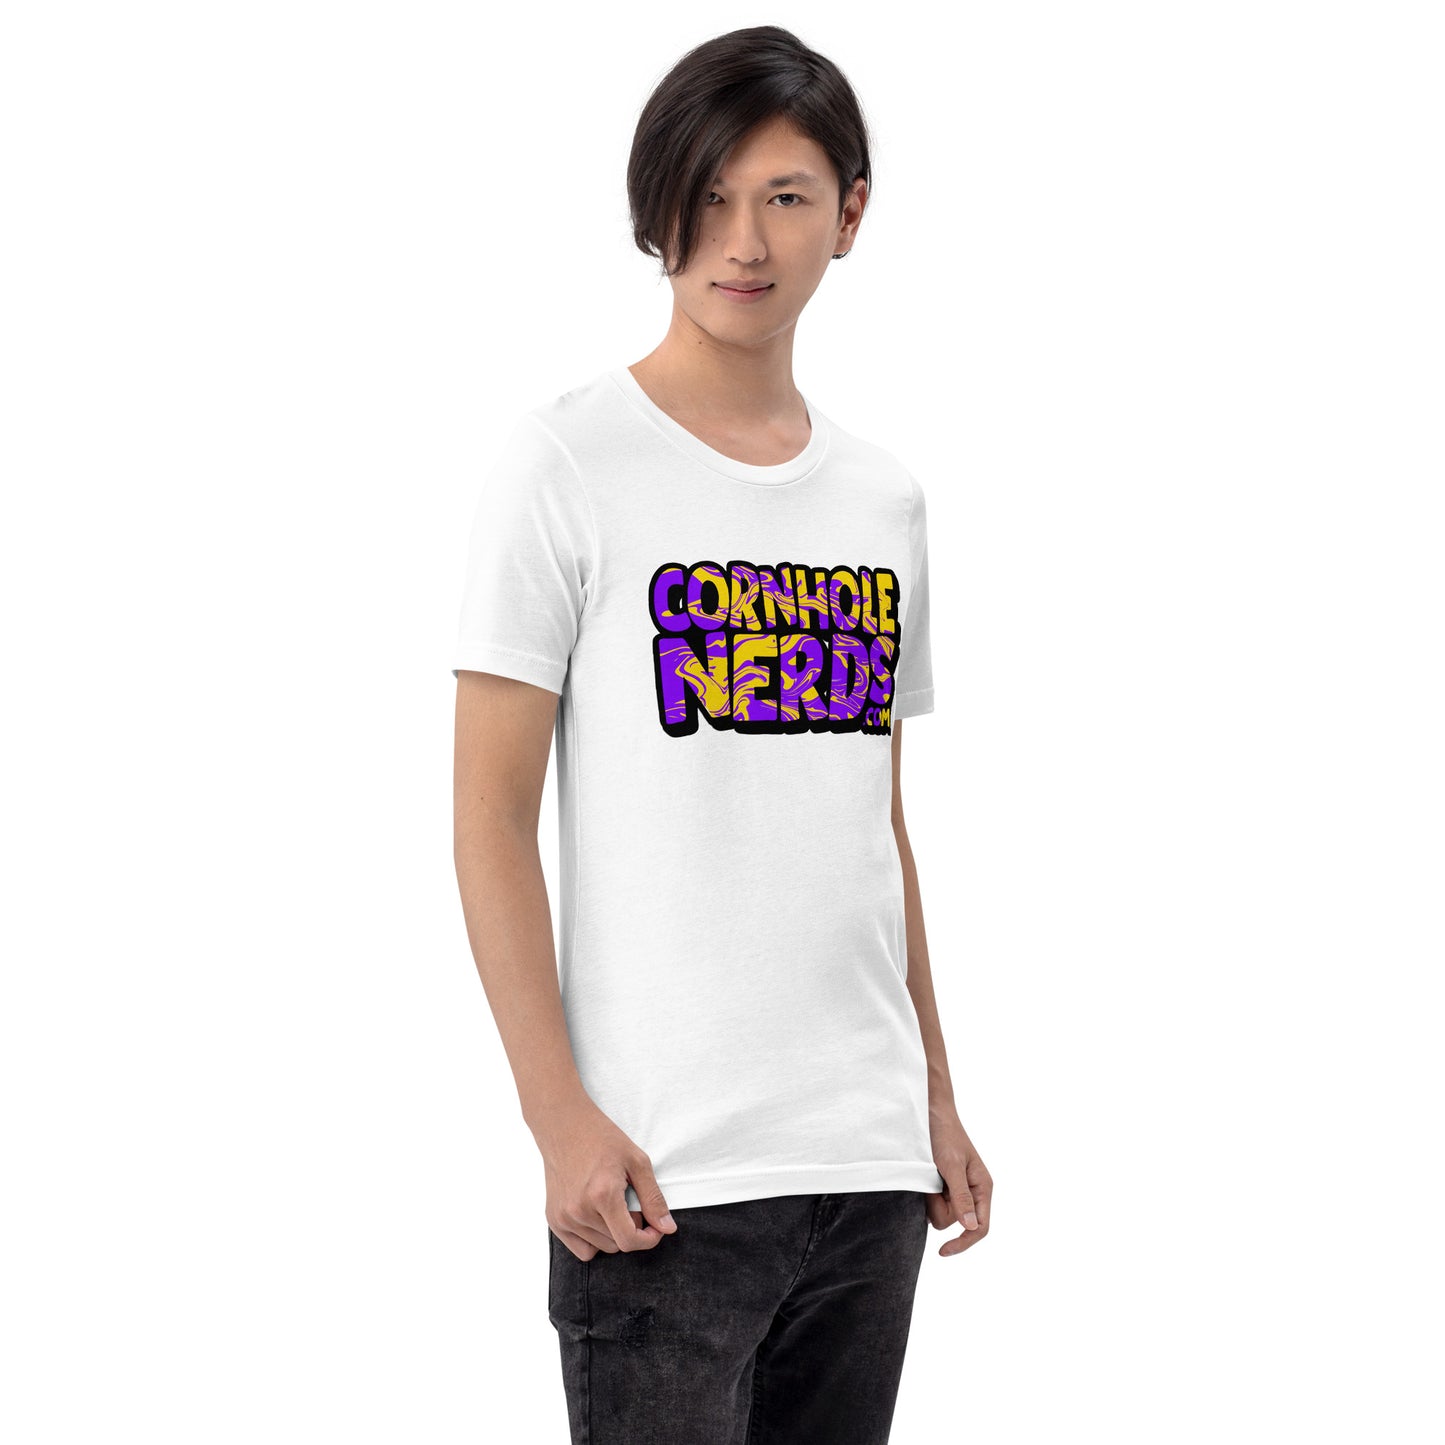 Lola's Purple/Yellow Swirl NerdWear Unisex t-shirt